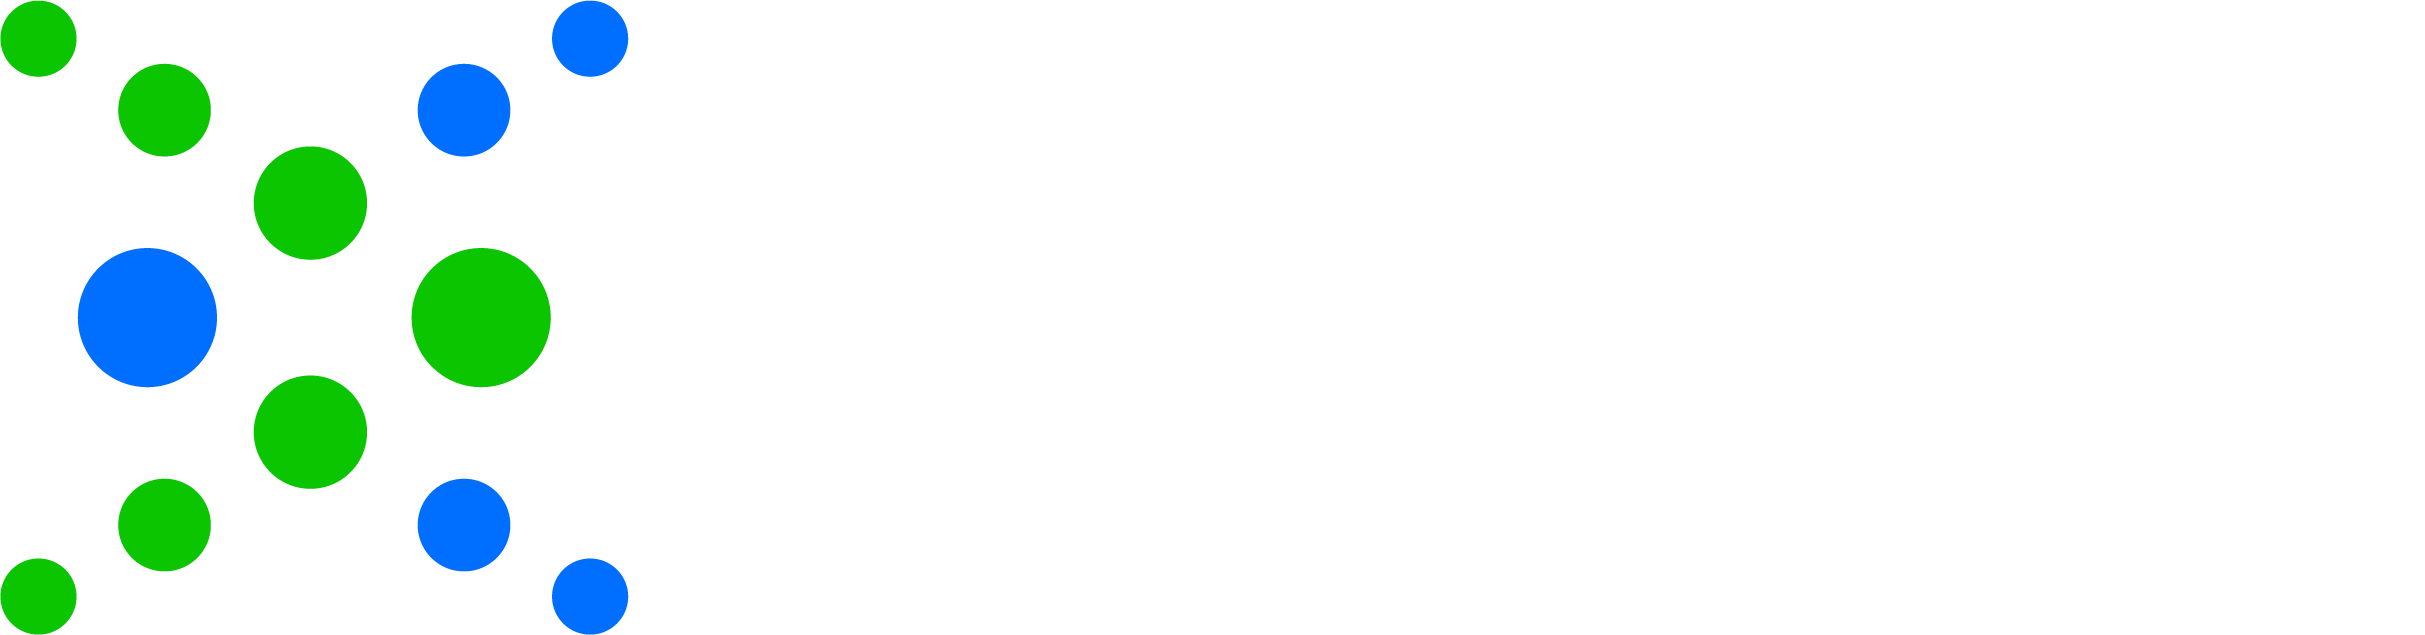 NACHA Logo